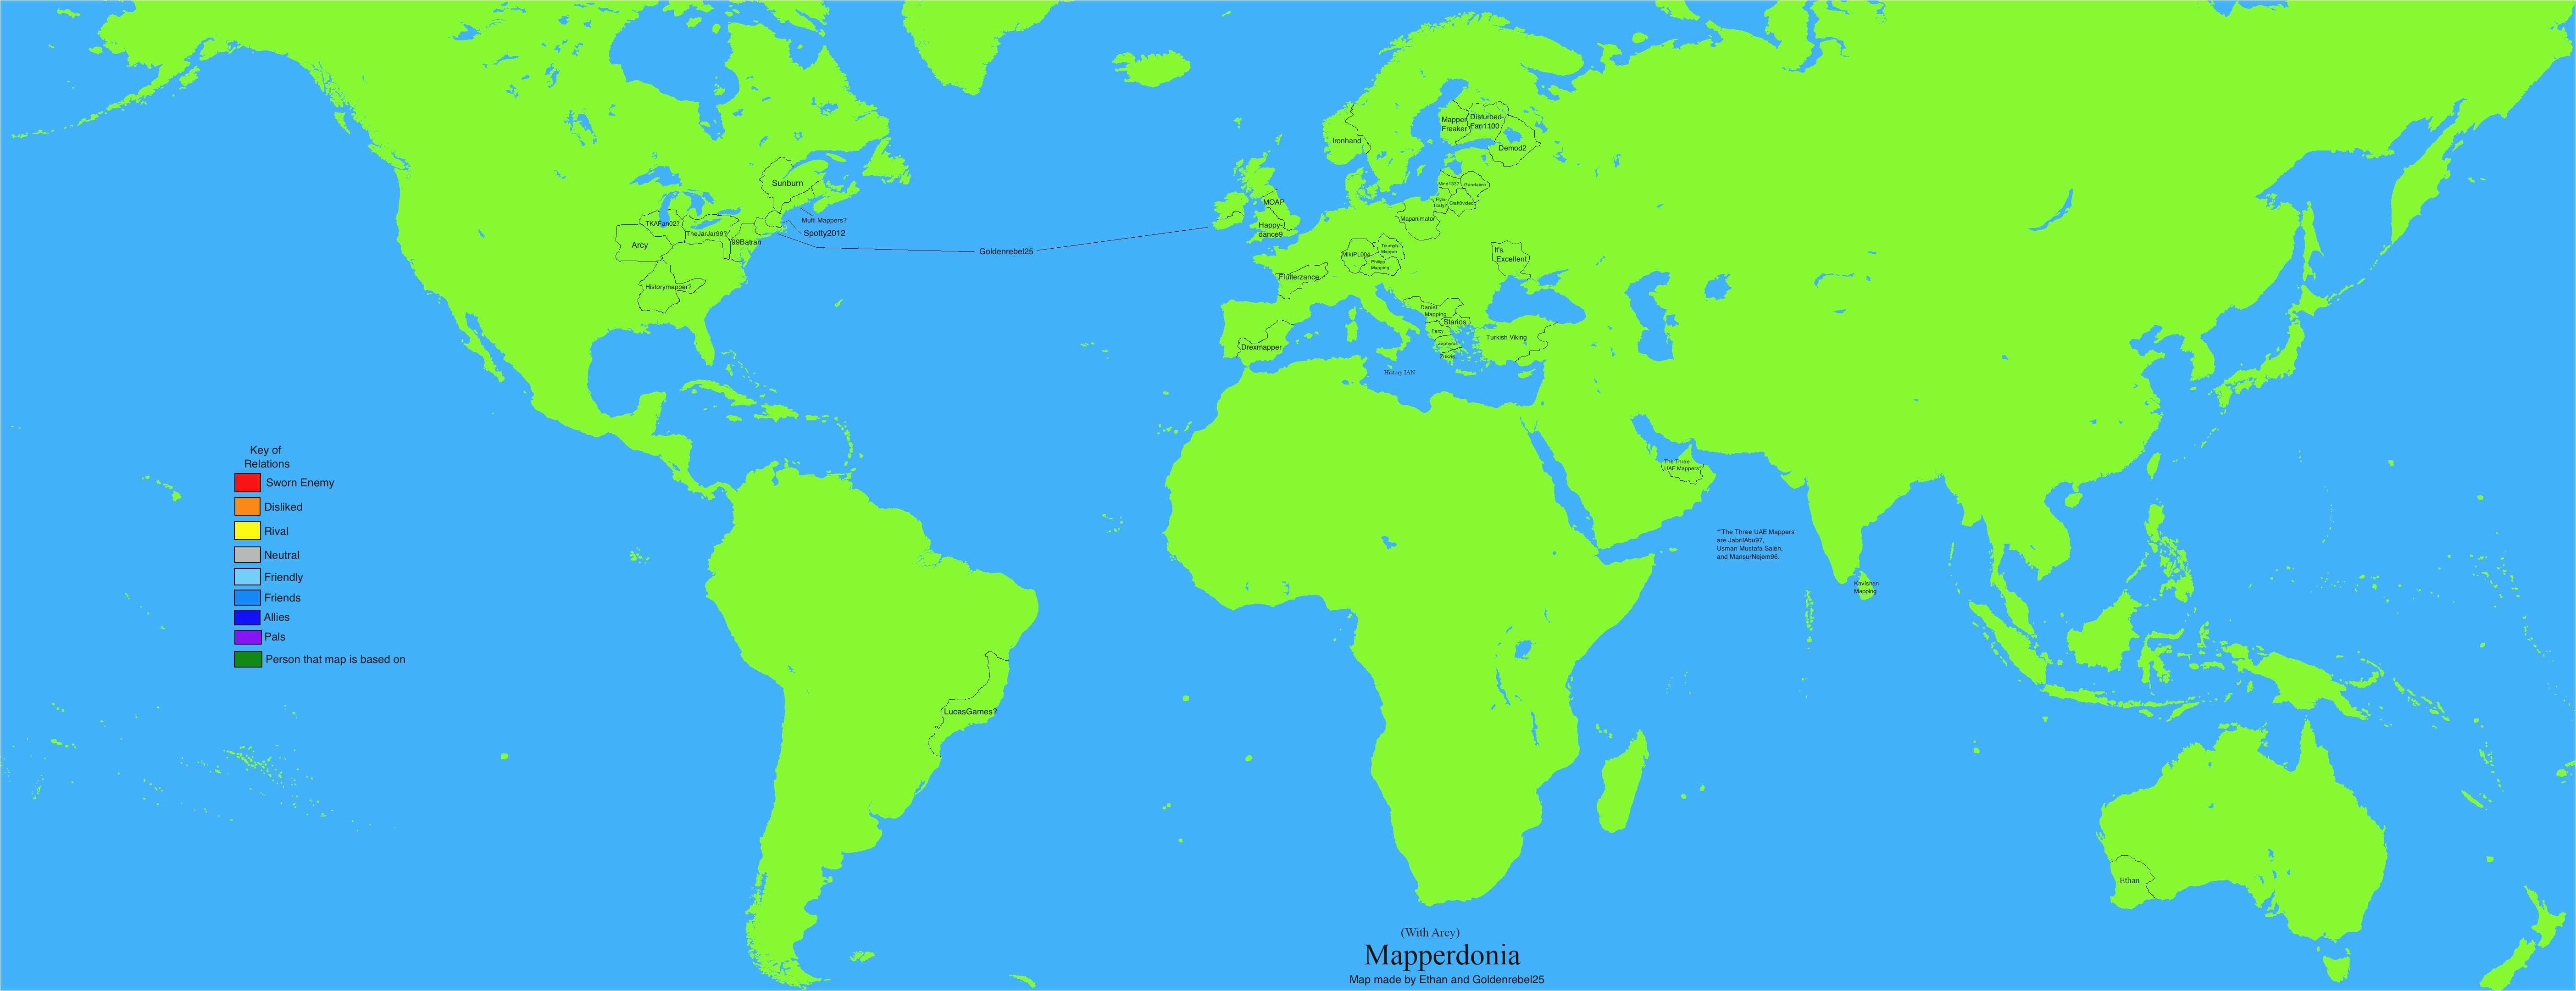 Printable Maps the World Inspirational User Blog Goldenrebel25